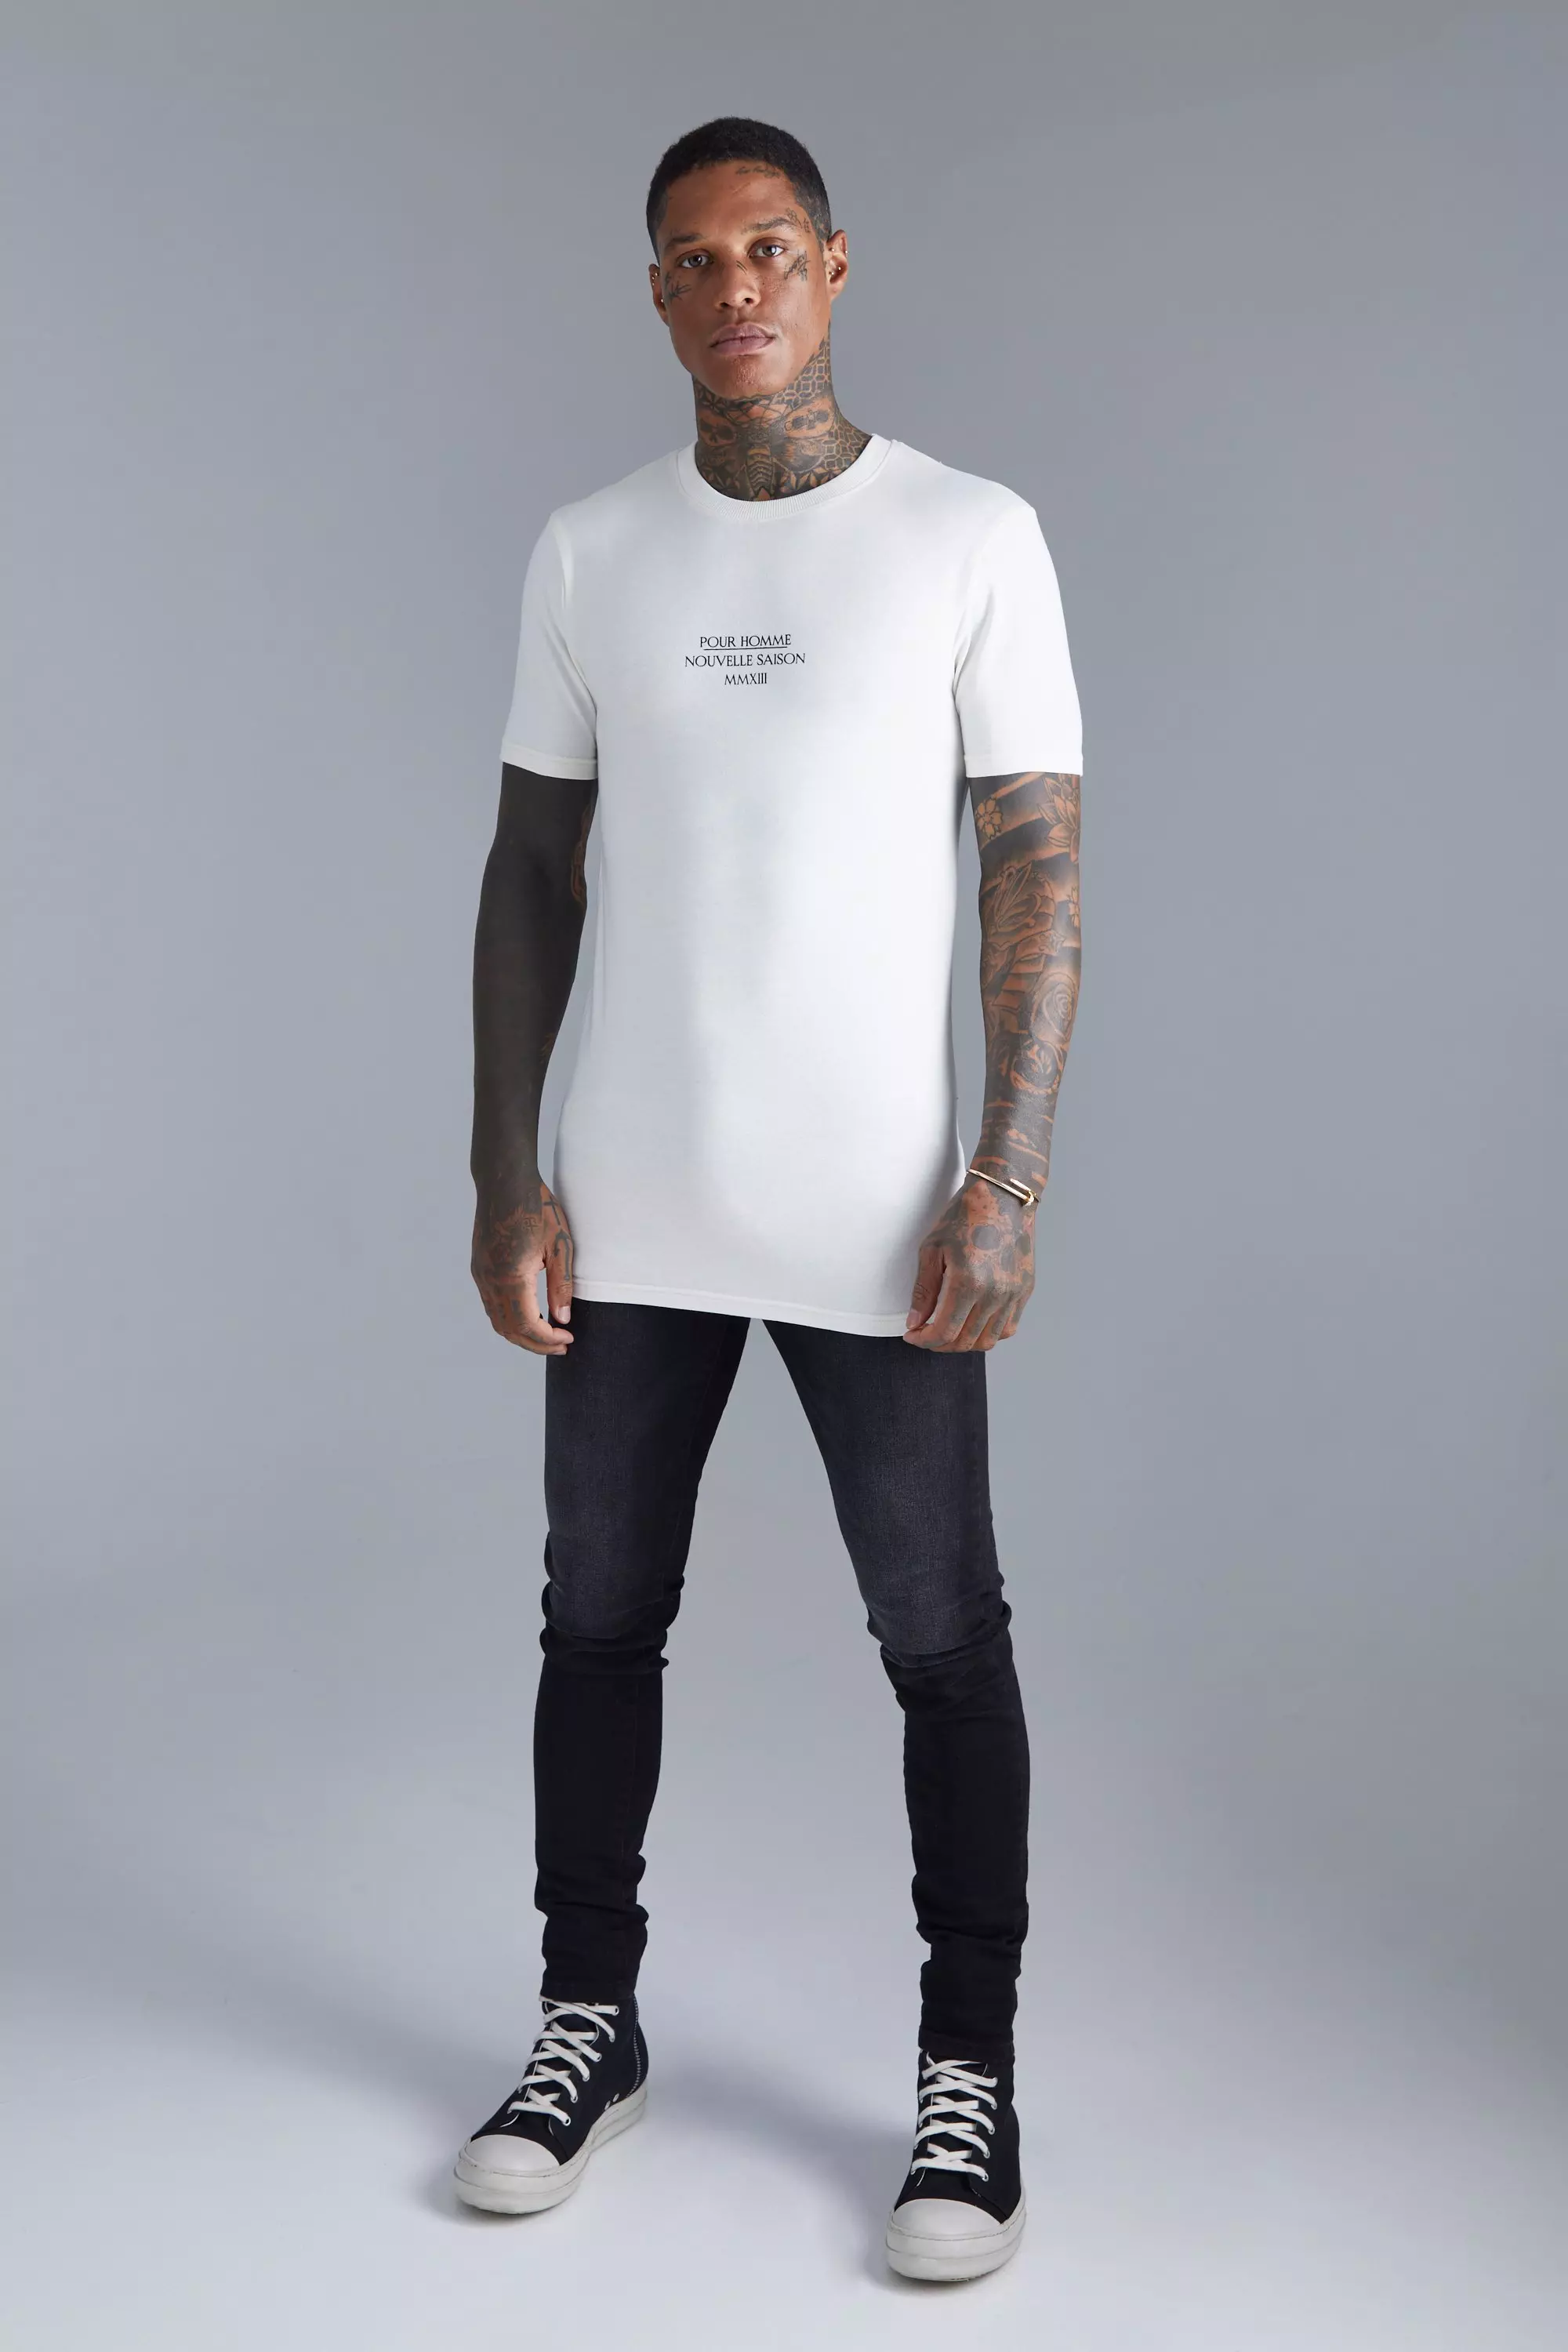 Hummingbird kvarter diameter Muscle Fit Longline Pour Homme Print T-shirt | boohooMAN USA